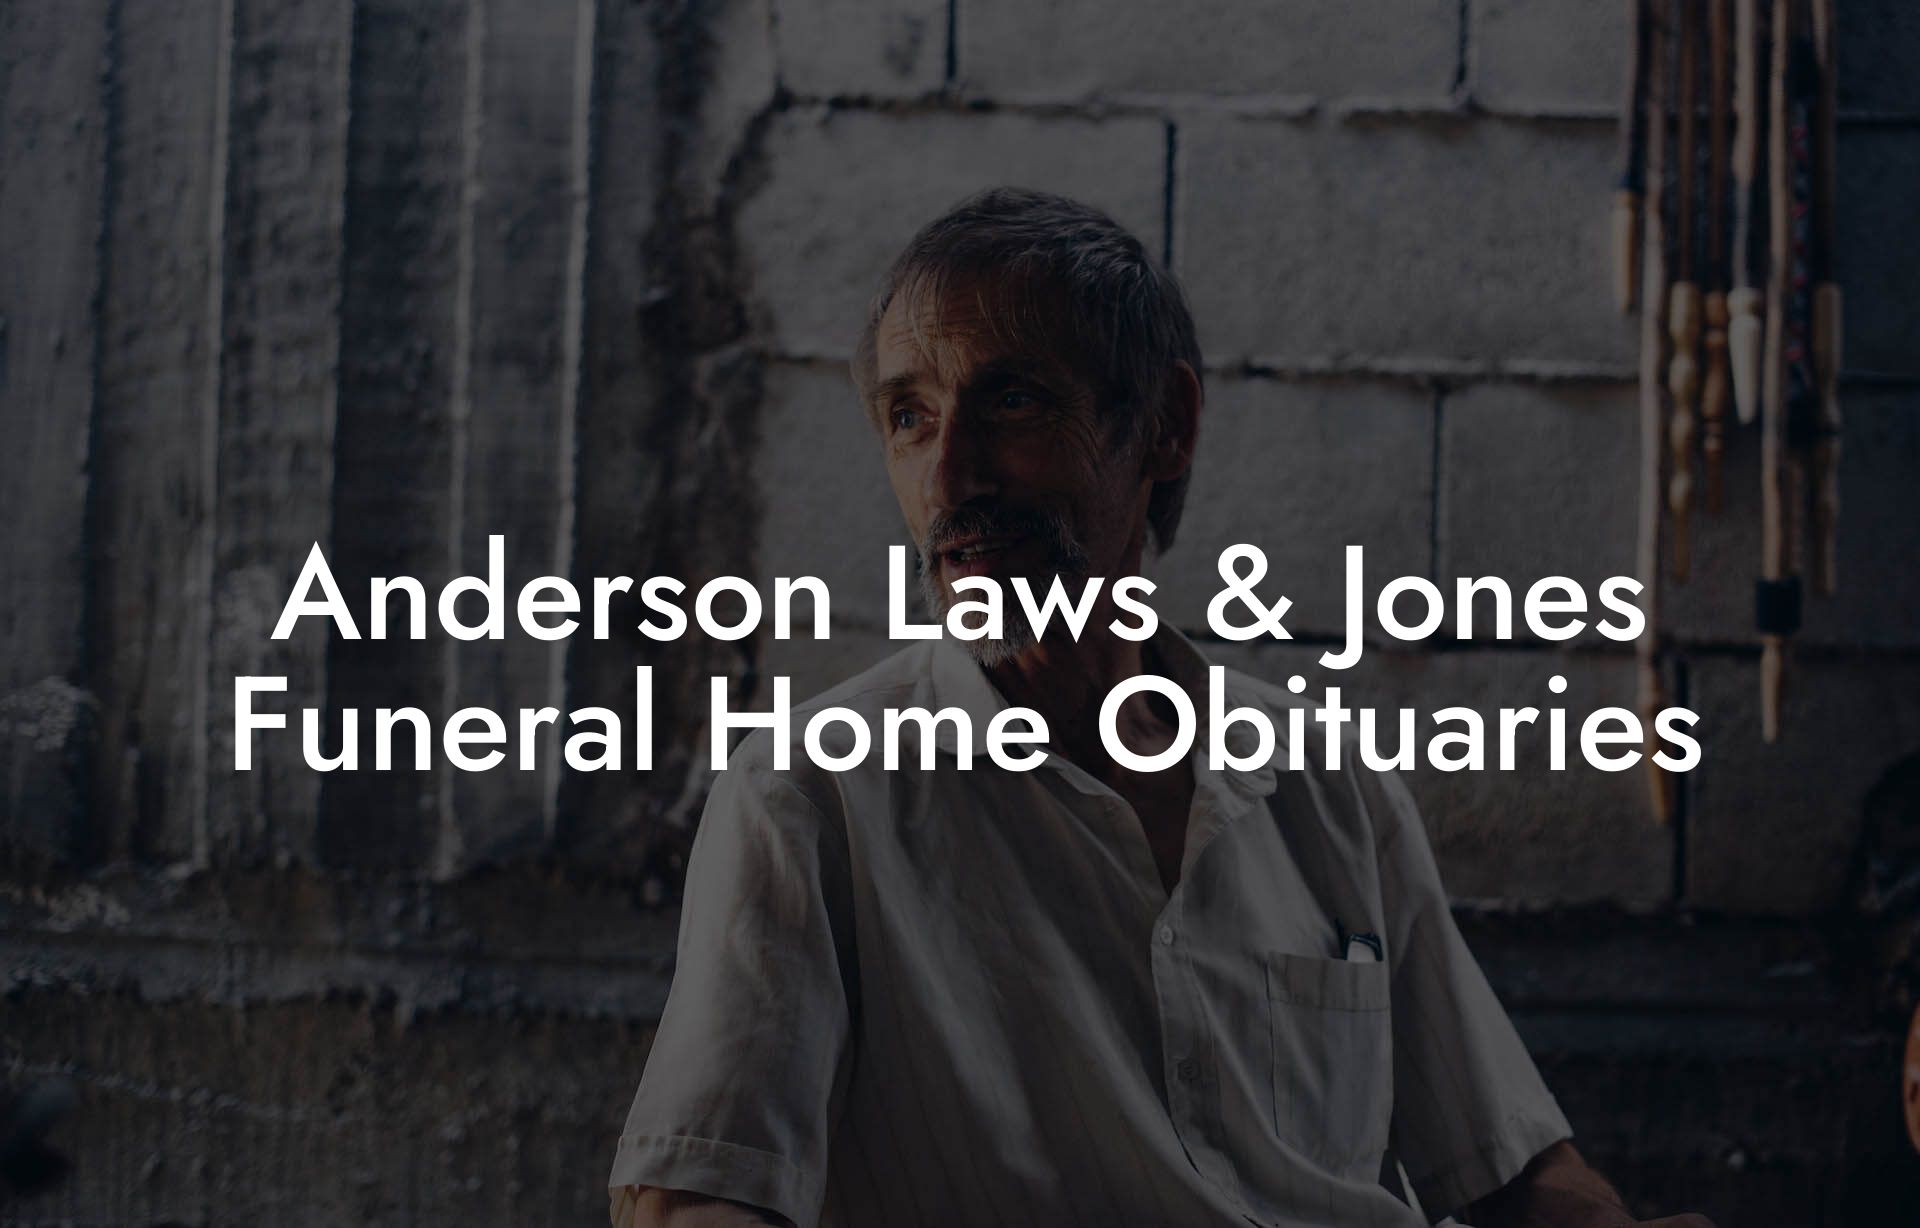 Anderson Laws & Jones Funeral Home Obituaries